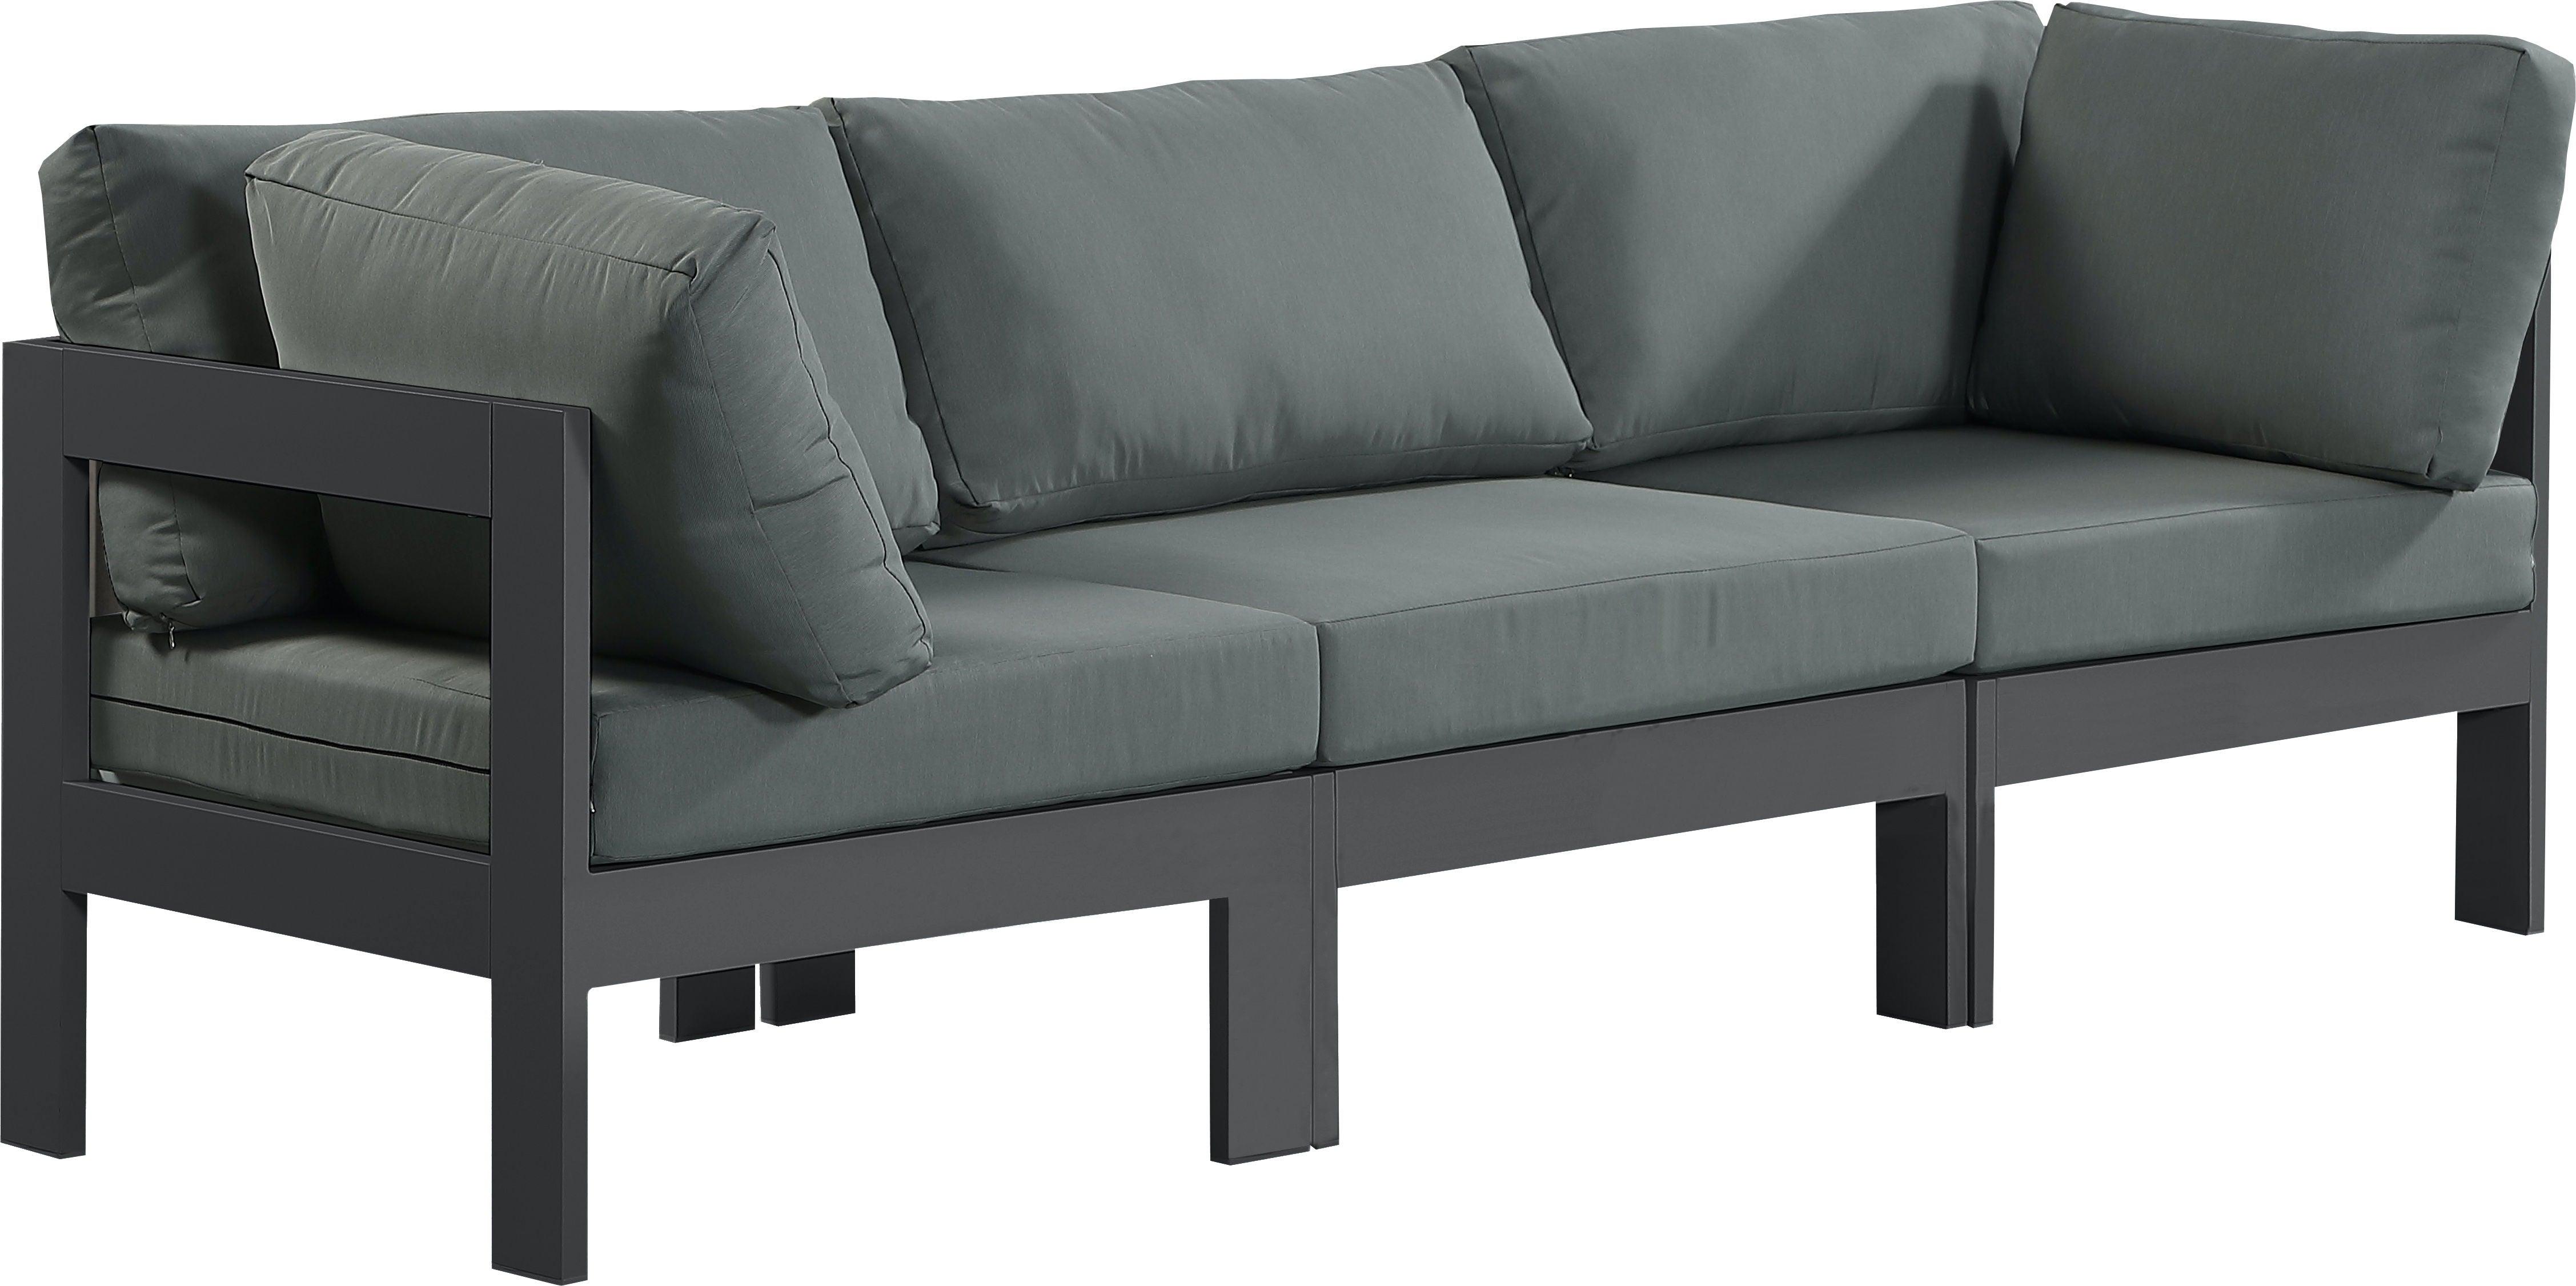 Meridian Furniture - Nizuc - Outdoor Patio Modular Sofa 3 Seats - Grey - 5th Avenue Furniture